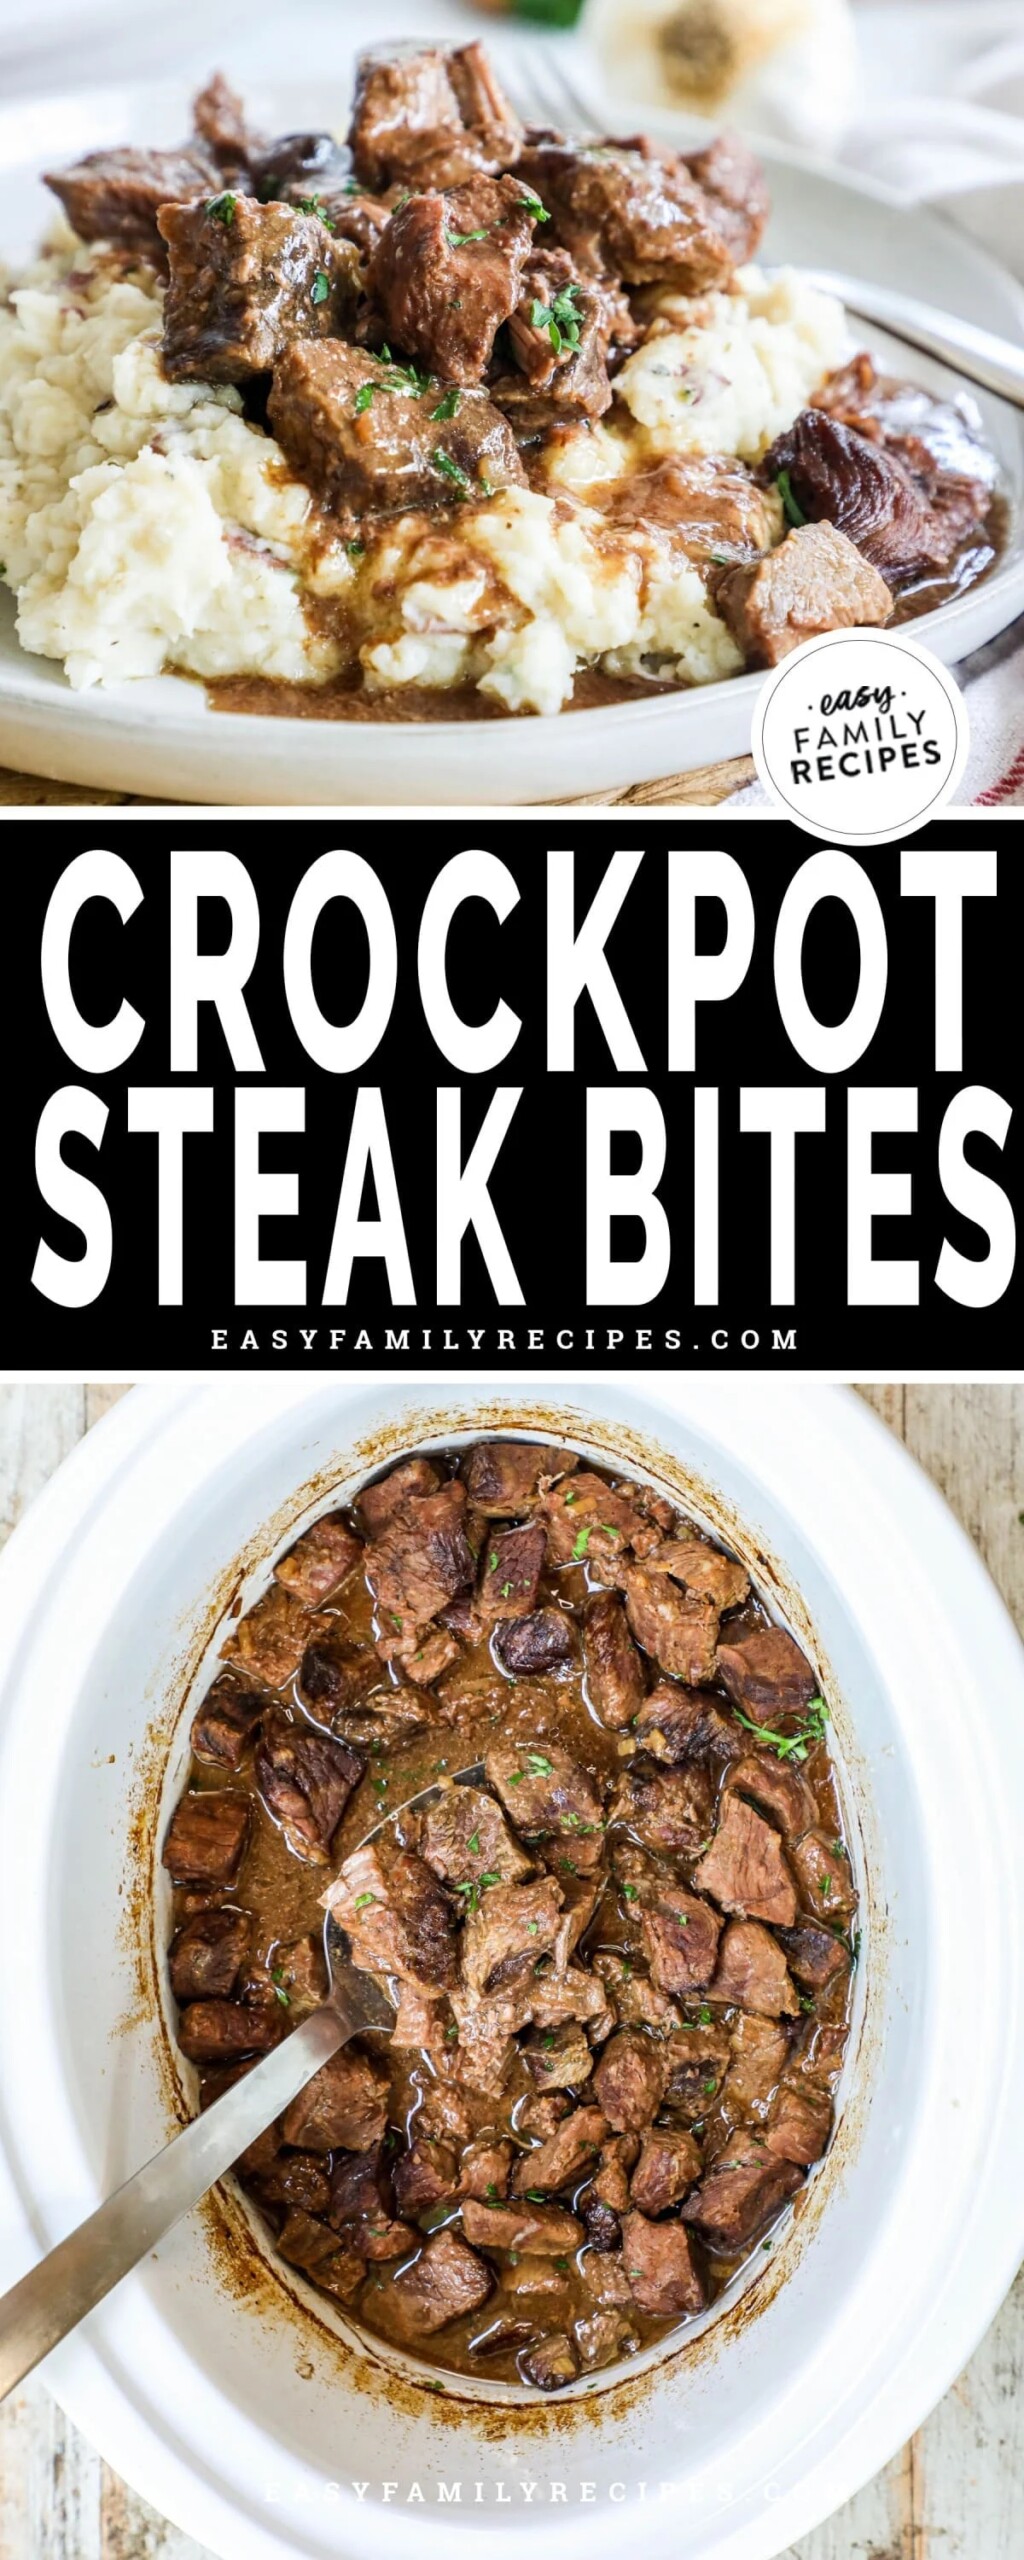 Crockpot steak bites recipe